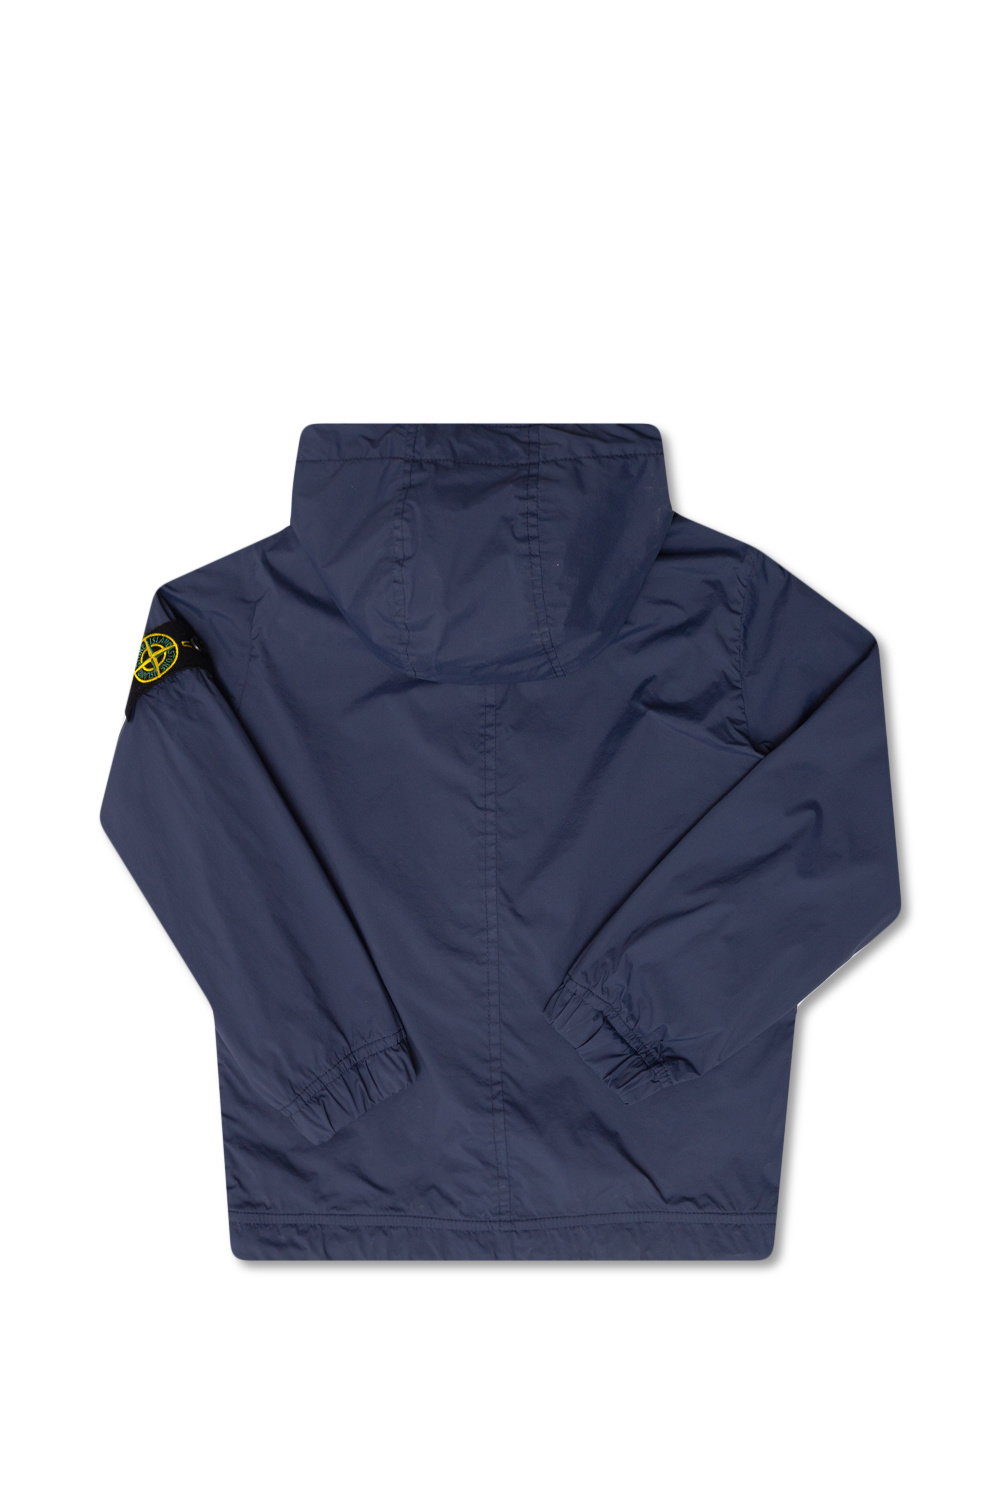 marni soft shell jacket Cotone Rain jacket